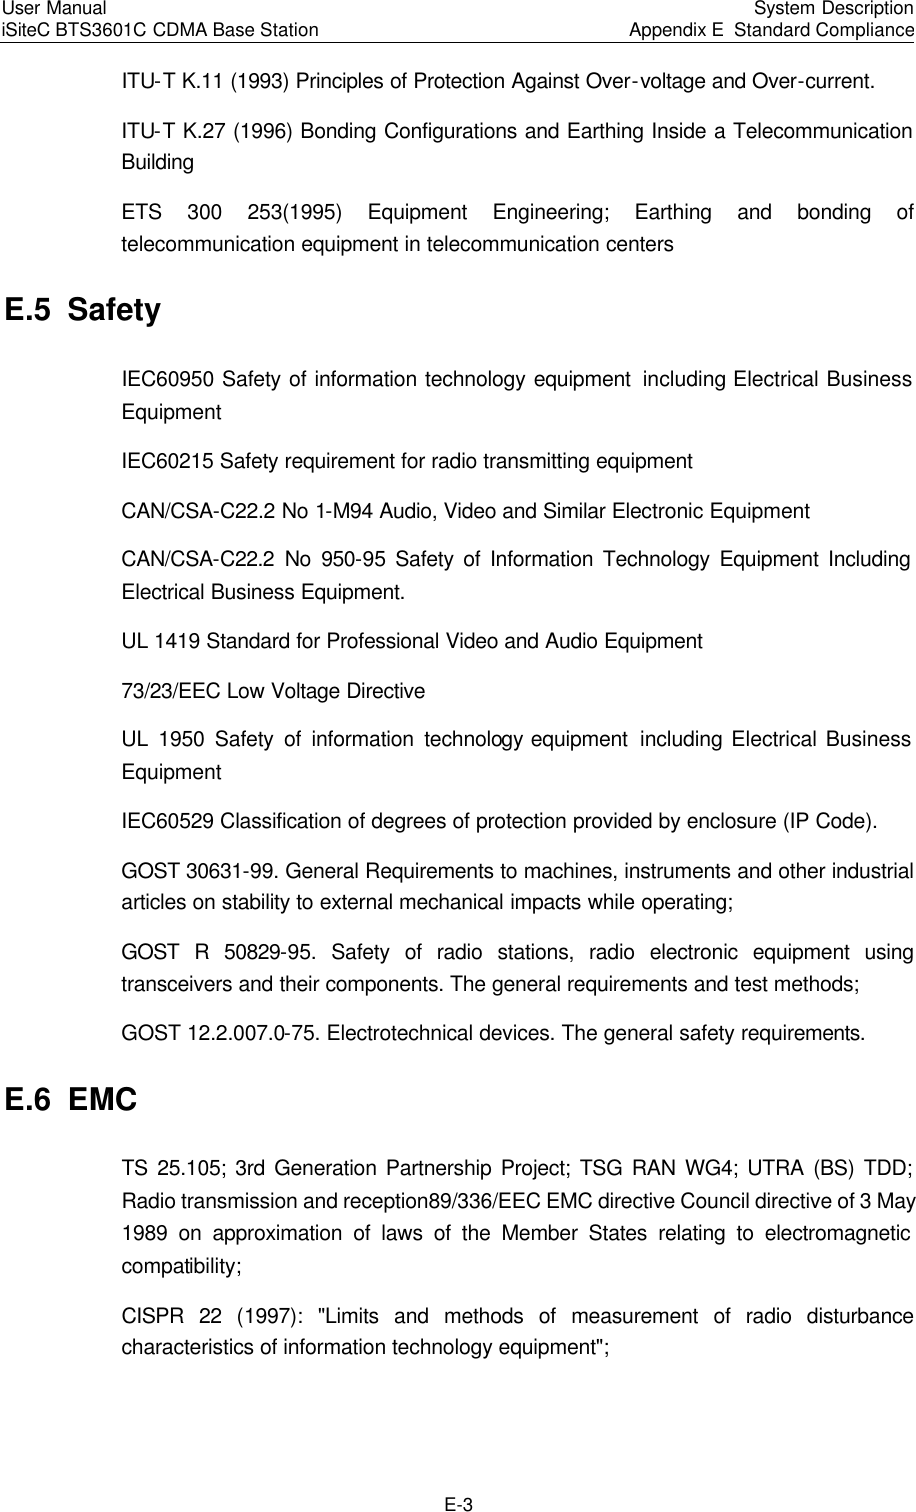 Page 83 of Huawei Technologies BTS3601C-800 CDMA Base Station User Manual 3